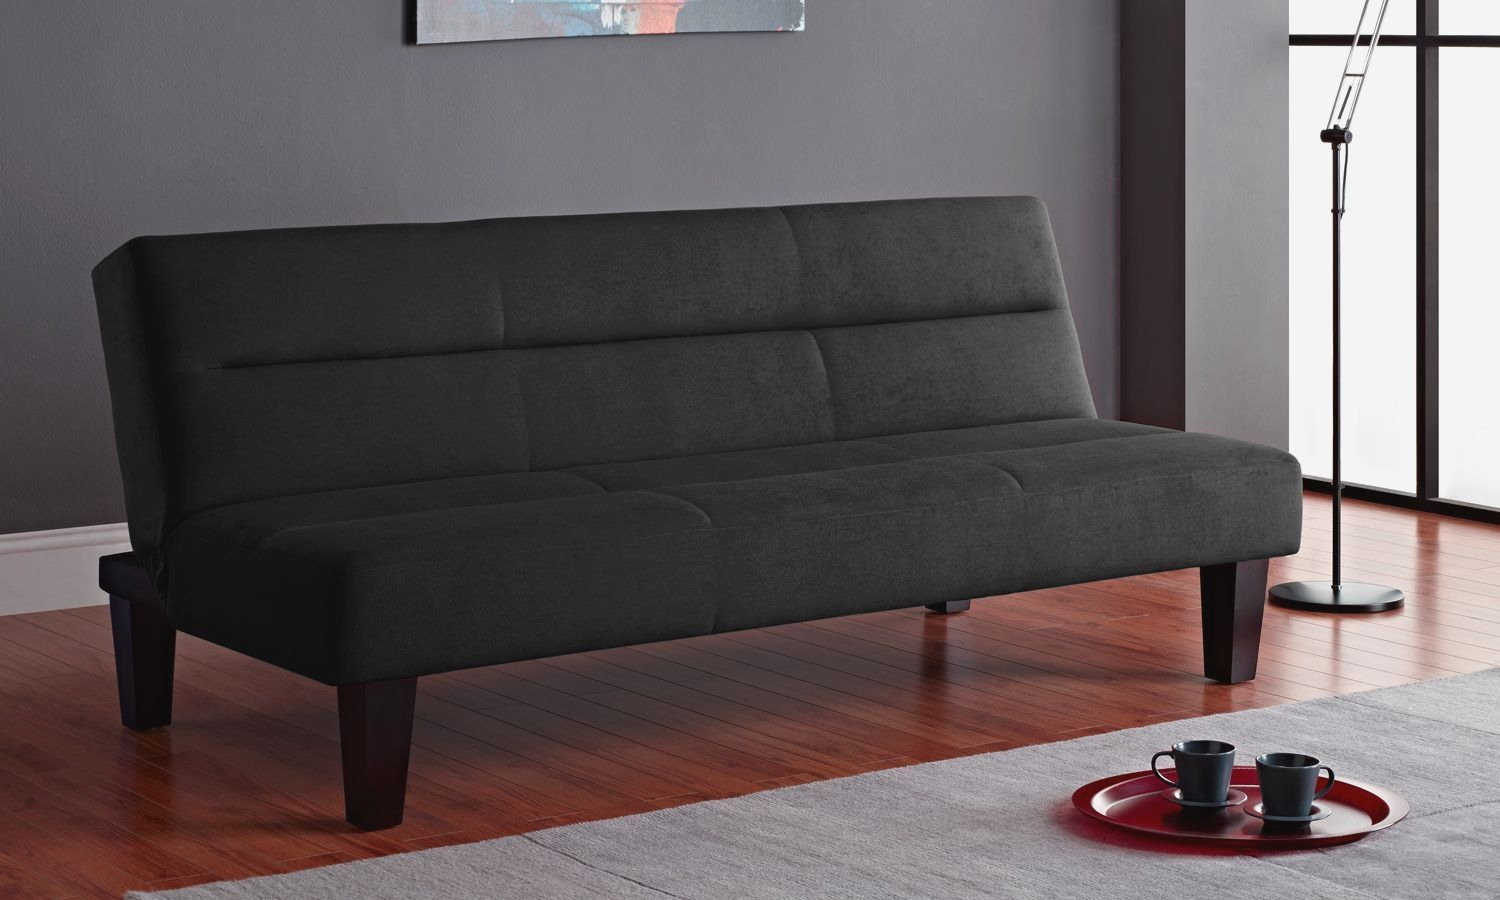 Kmart Leather Sleeper Sofa • Patio Ideas